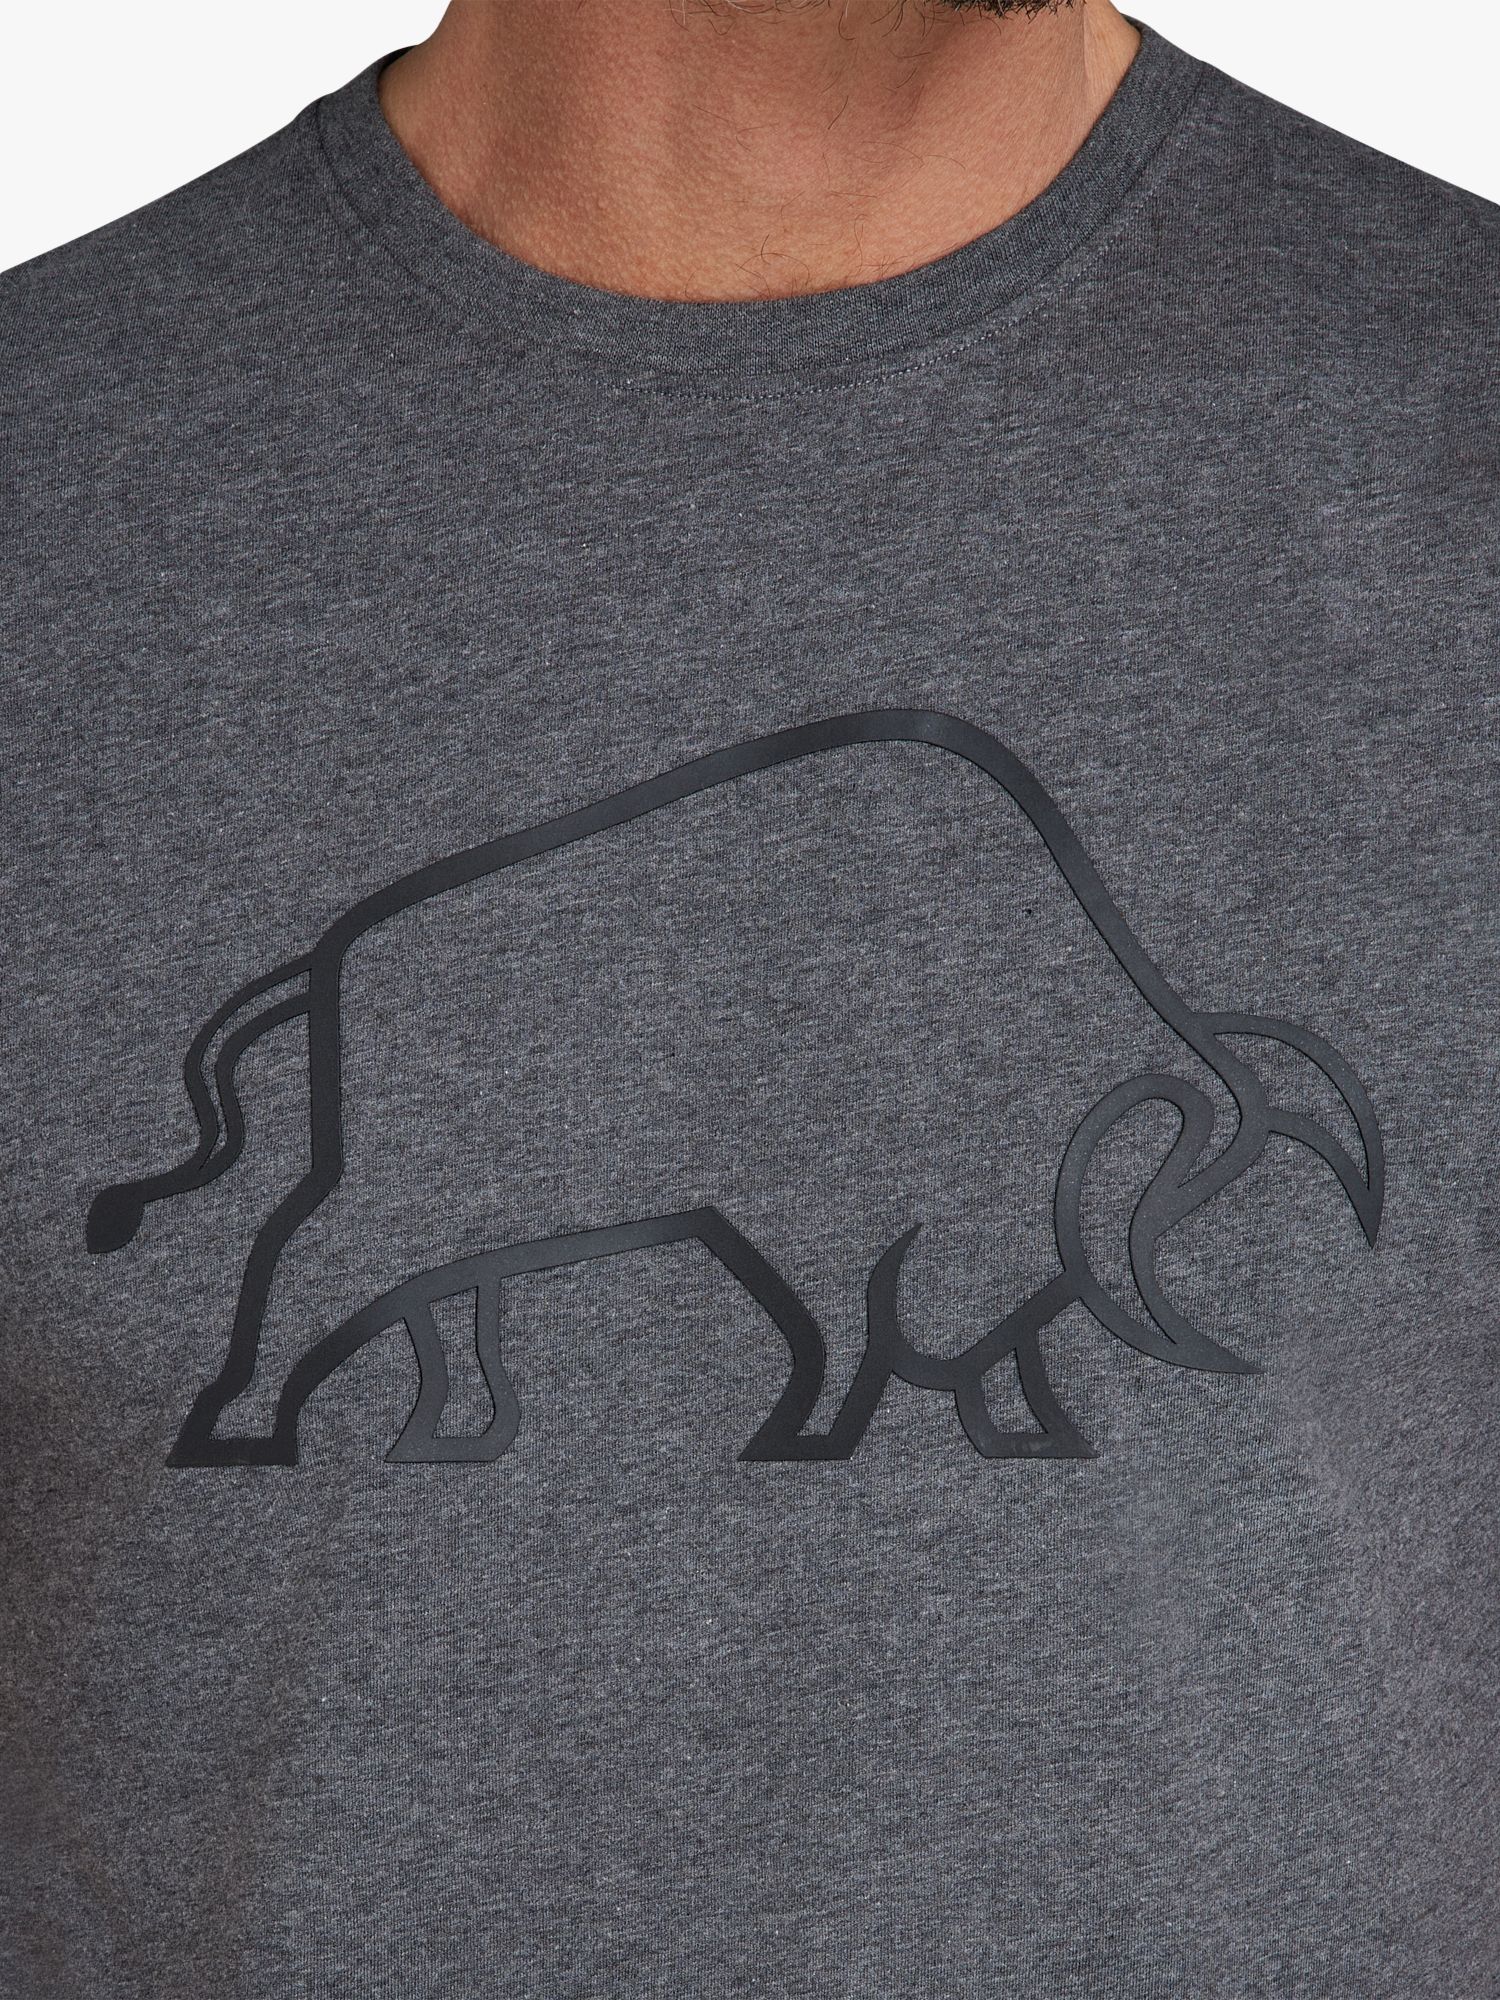 Buy Raging Bull High Build Bull T-Shirt, Charcoal Online at johnlewis.com